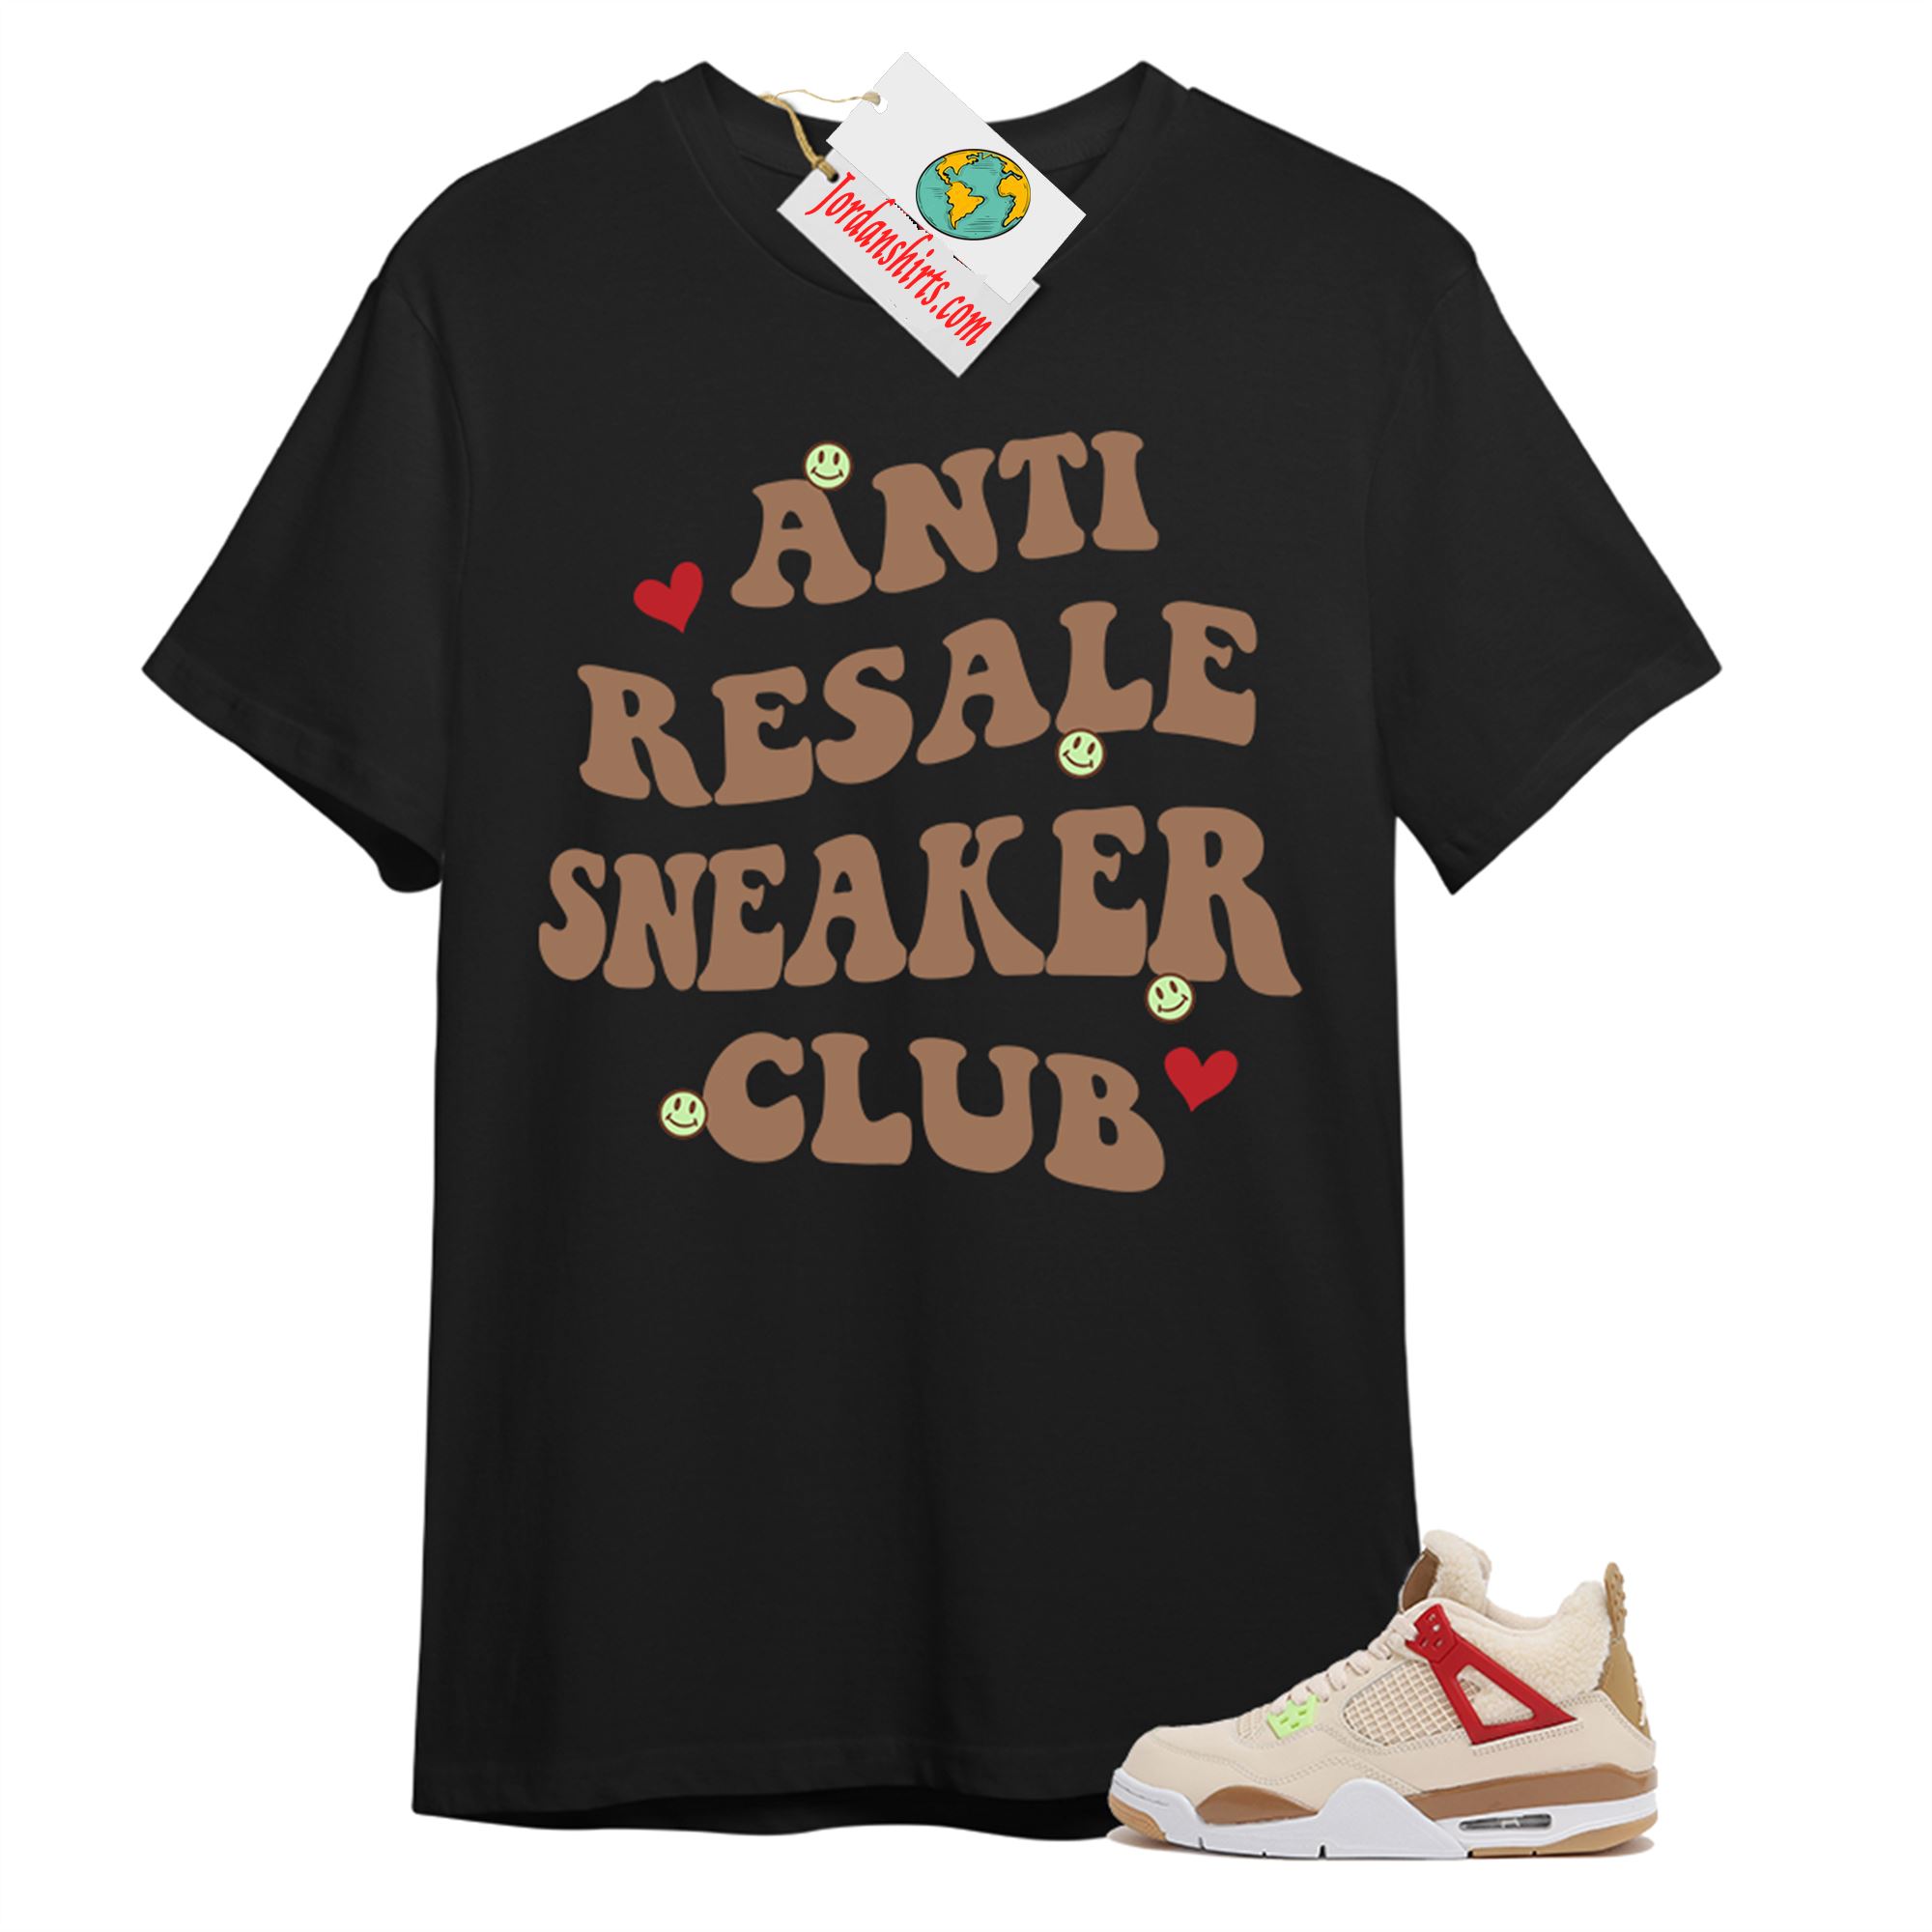 Jordan 4 Shirt, Anti Resale Sneaker Club Black T-shirt Air Jordan 4 Wild Things 4s Full Size Up To 5xl